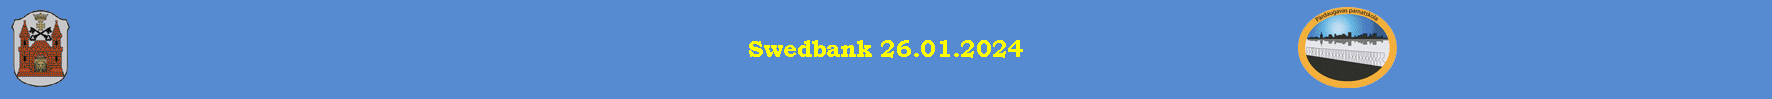 Swedbank 26.01.2024